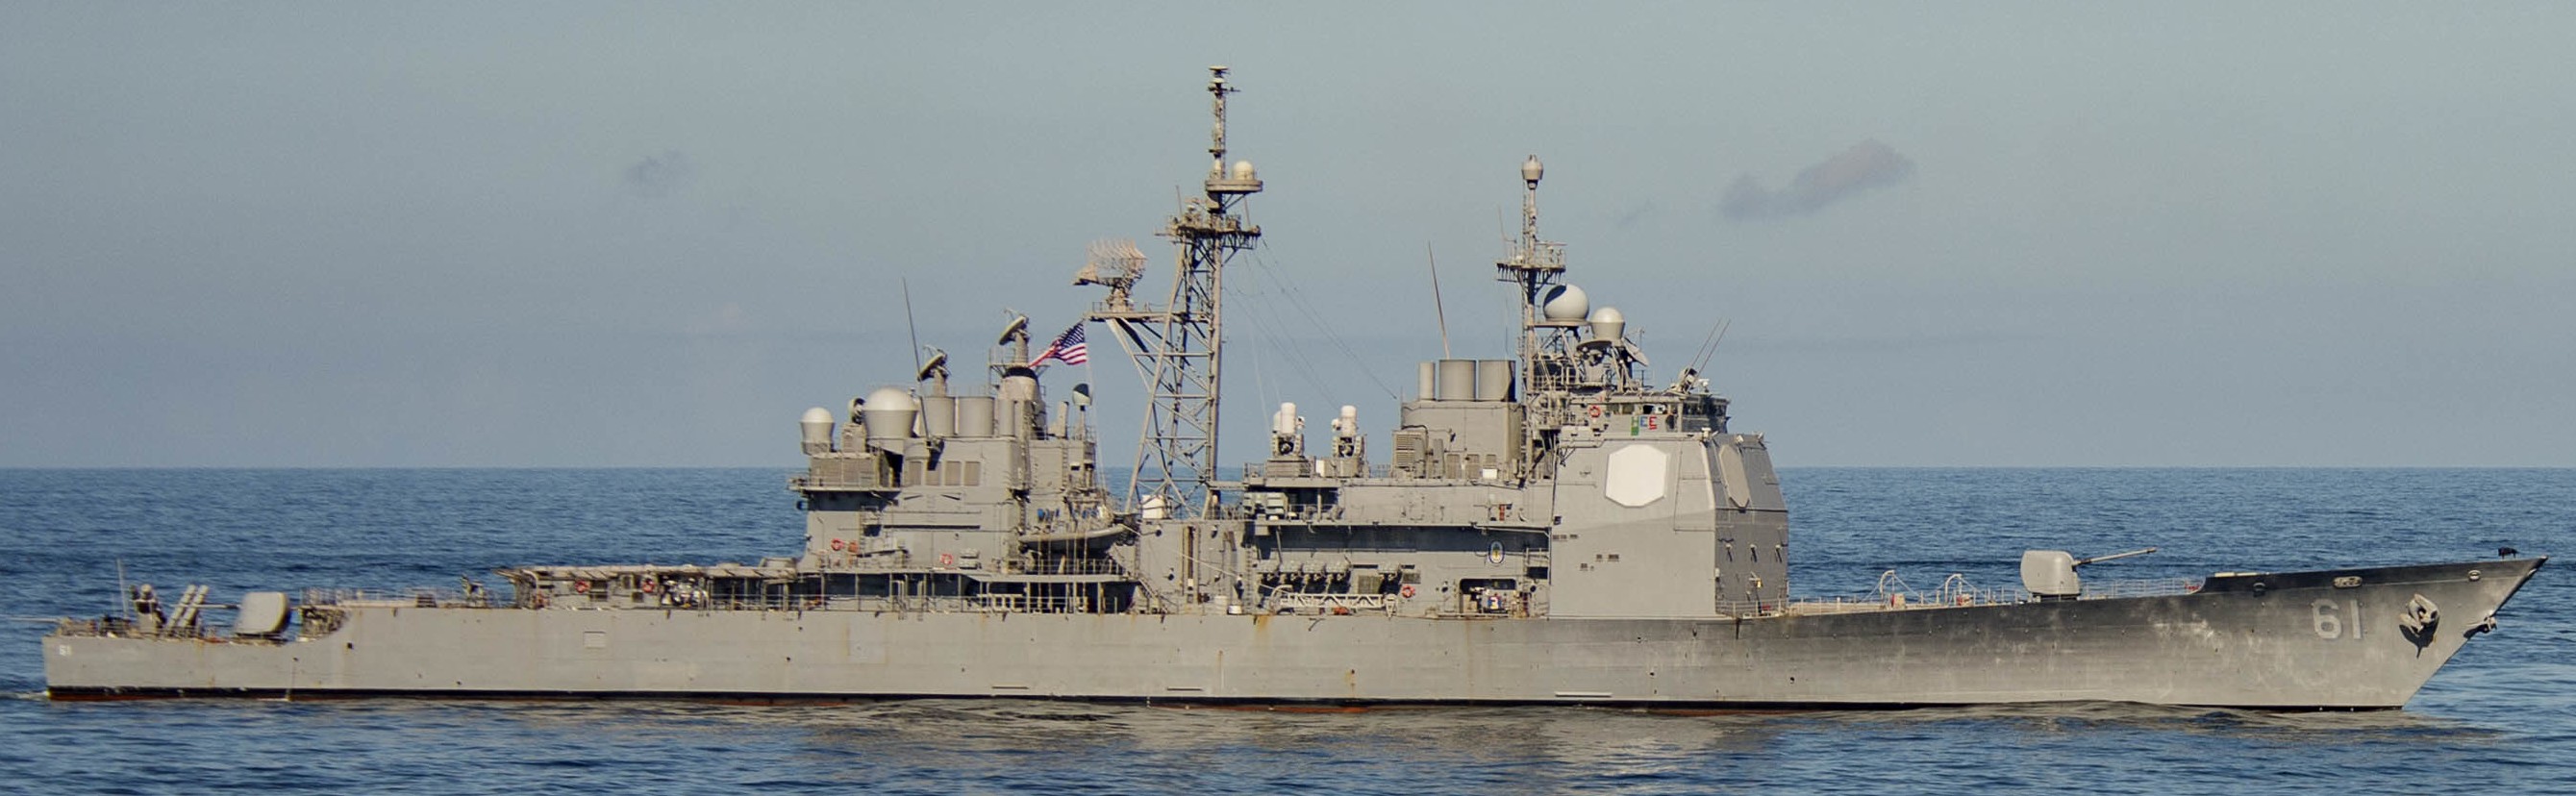 cg-61 uss monterey ticonderoga class guided missile cruiser aegis us navy 73